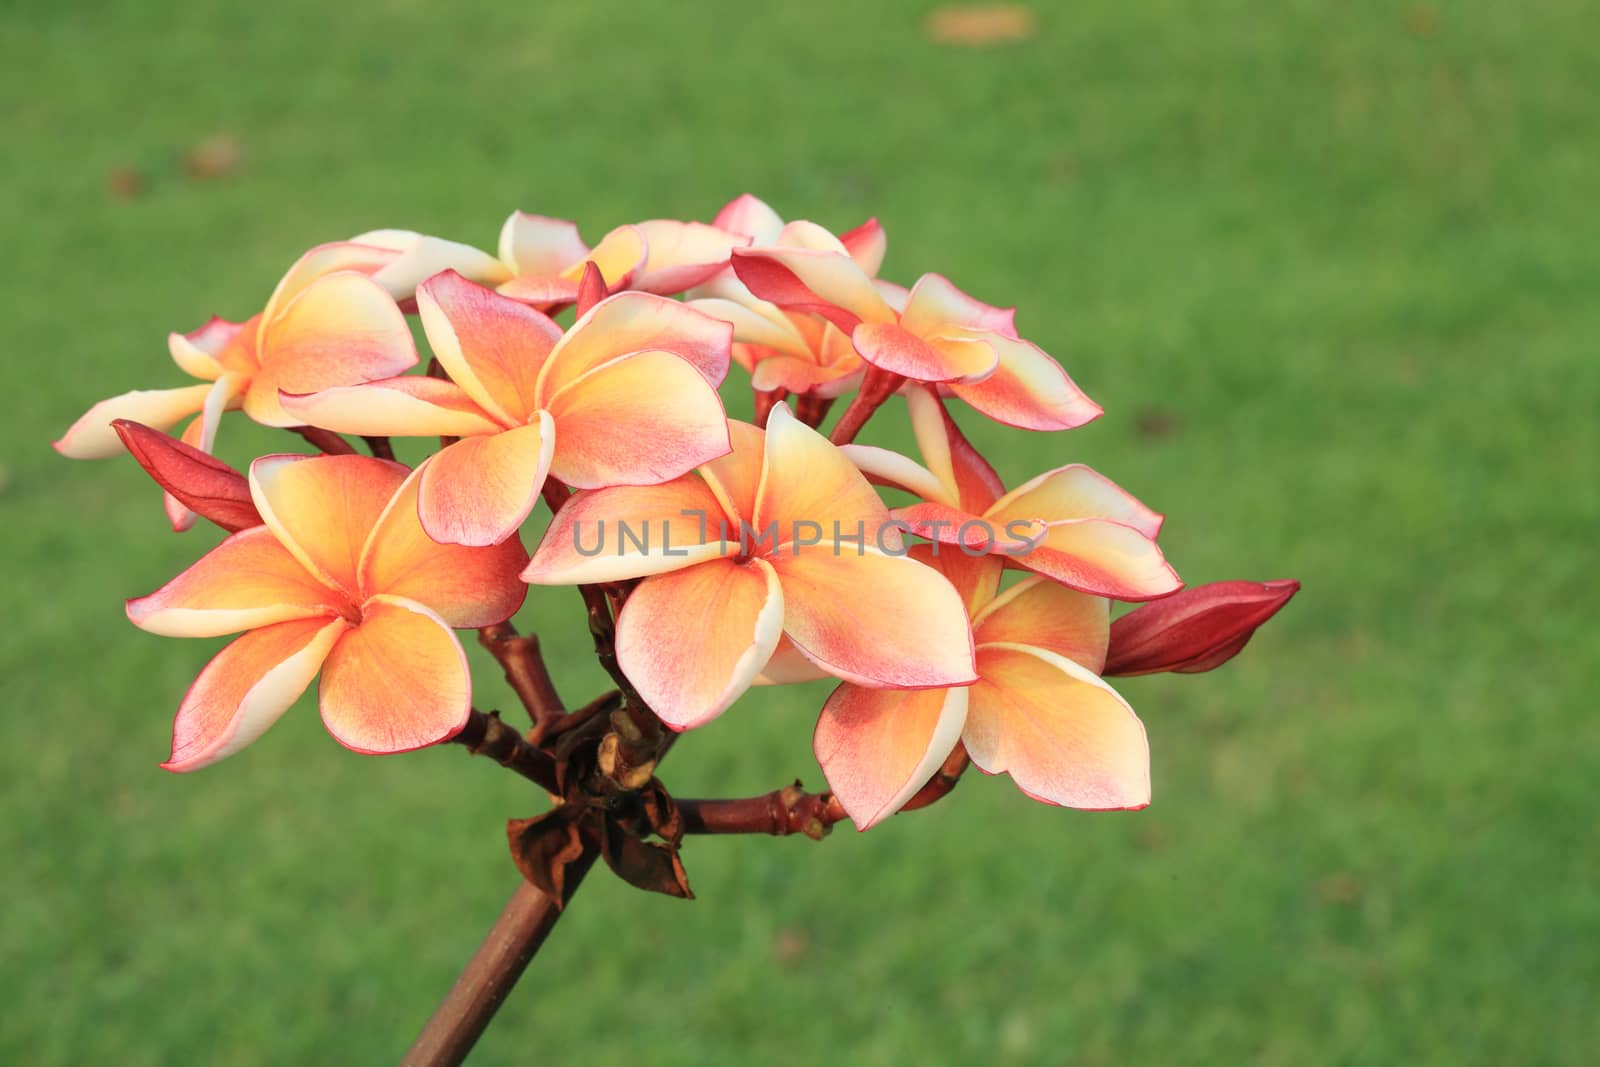 Tropical flowers frangipani (plumeria) by foto76